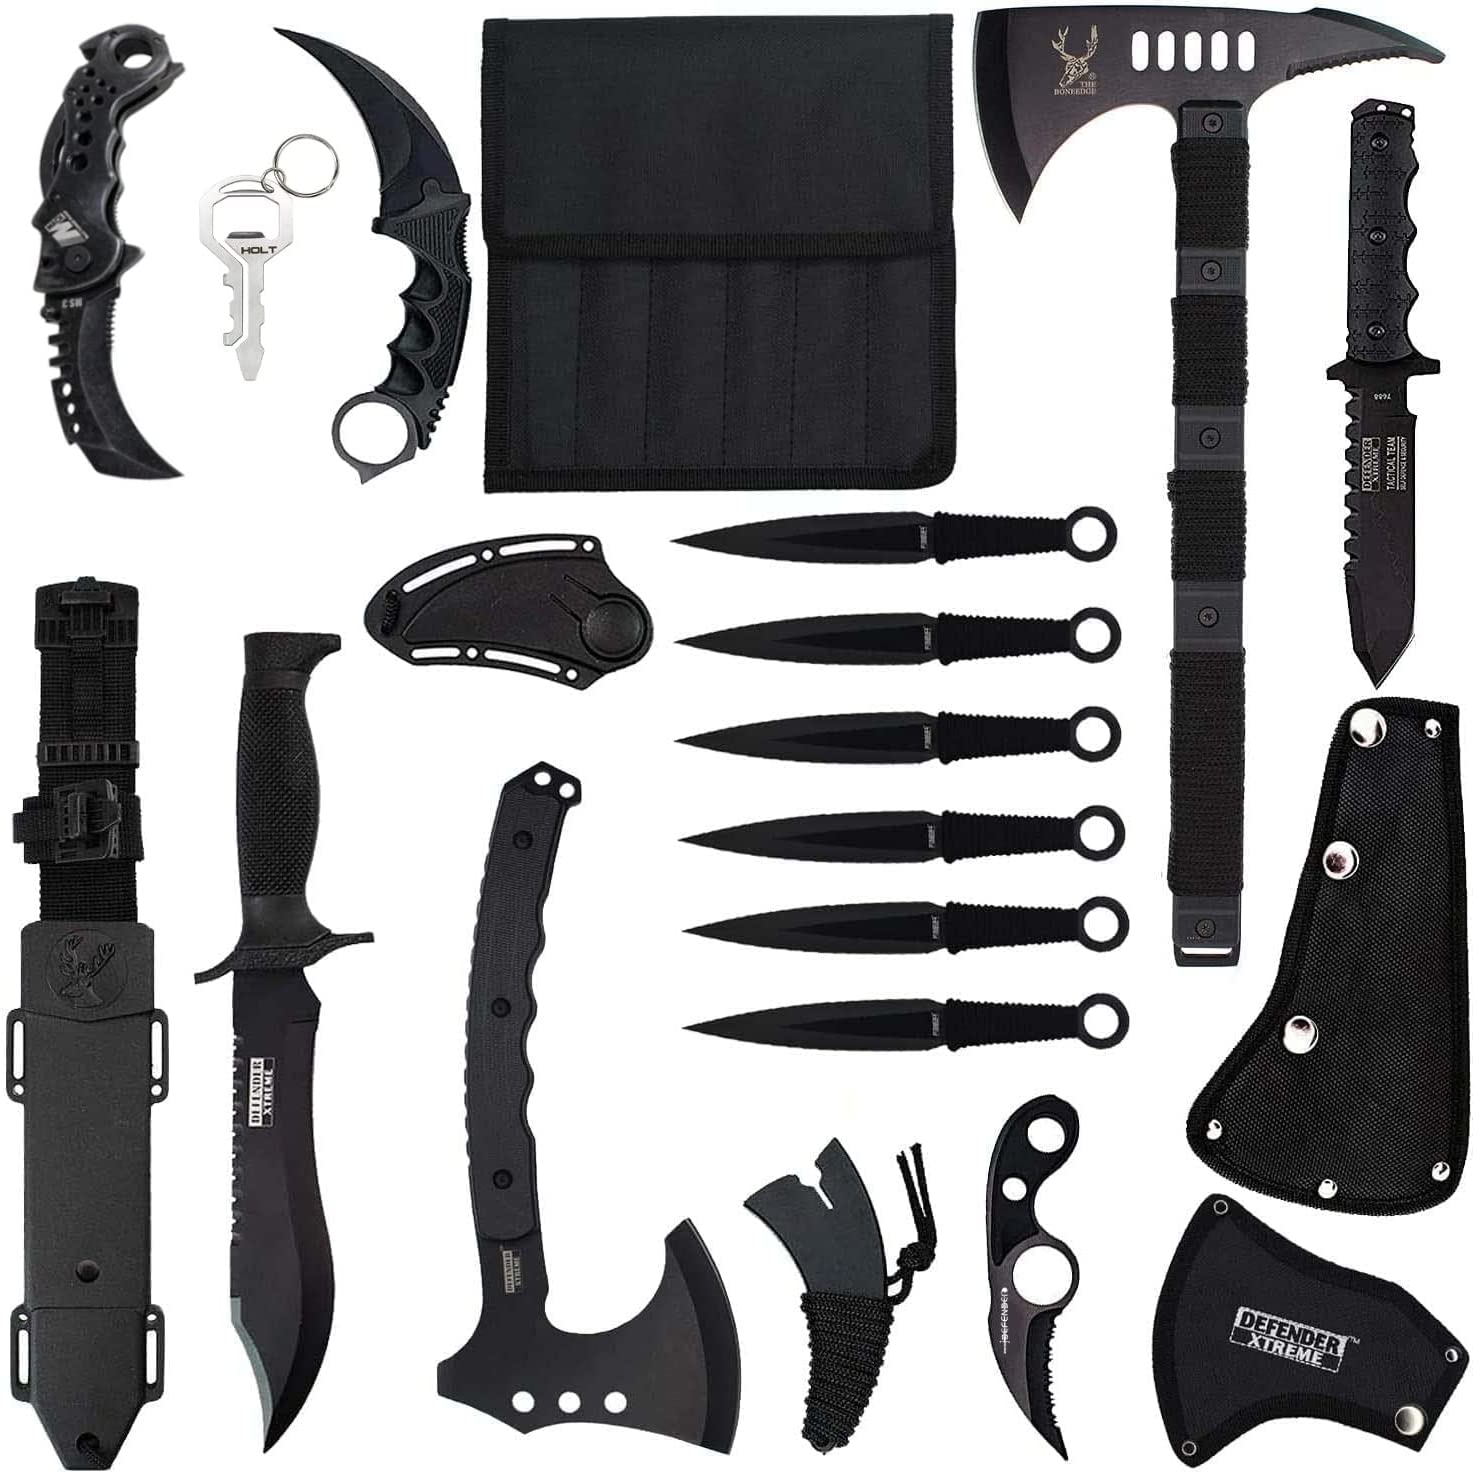 Blade Factory 15pc Tactical Survival Set| 2 Fixed Blade Knives | 2 Hatchet Axes| Fixed Karambit | Folding Karambit| Multitool Pocket Knife| Mini Neck Knife| 6 Throwing Knives | Holt Multitool Keychain